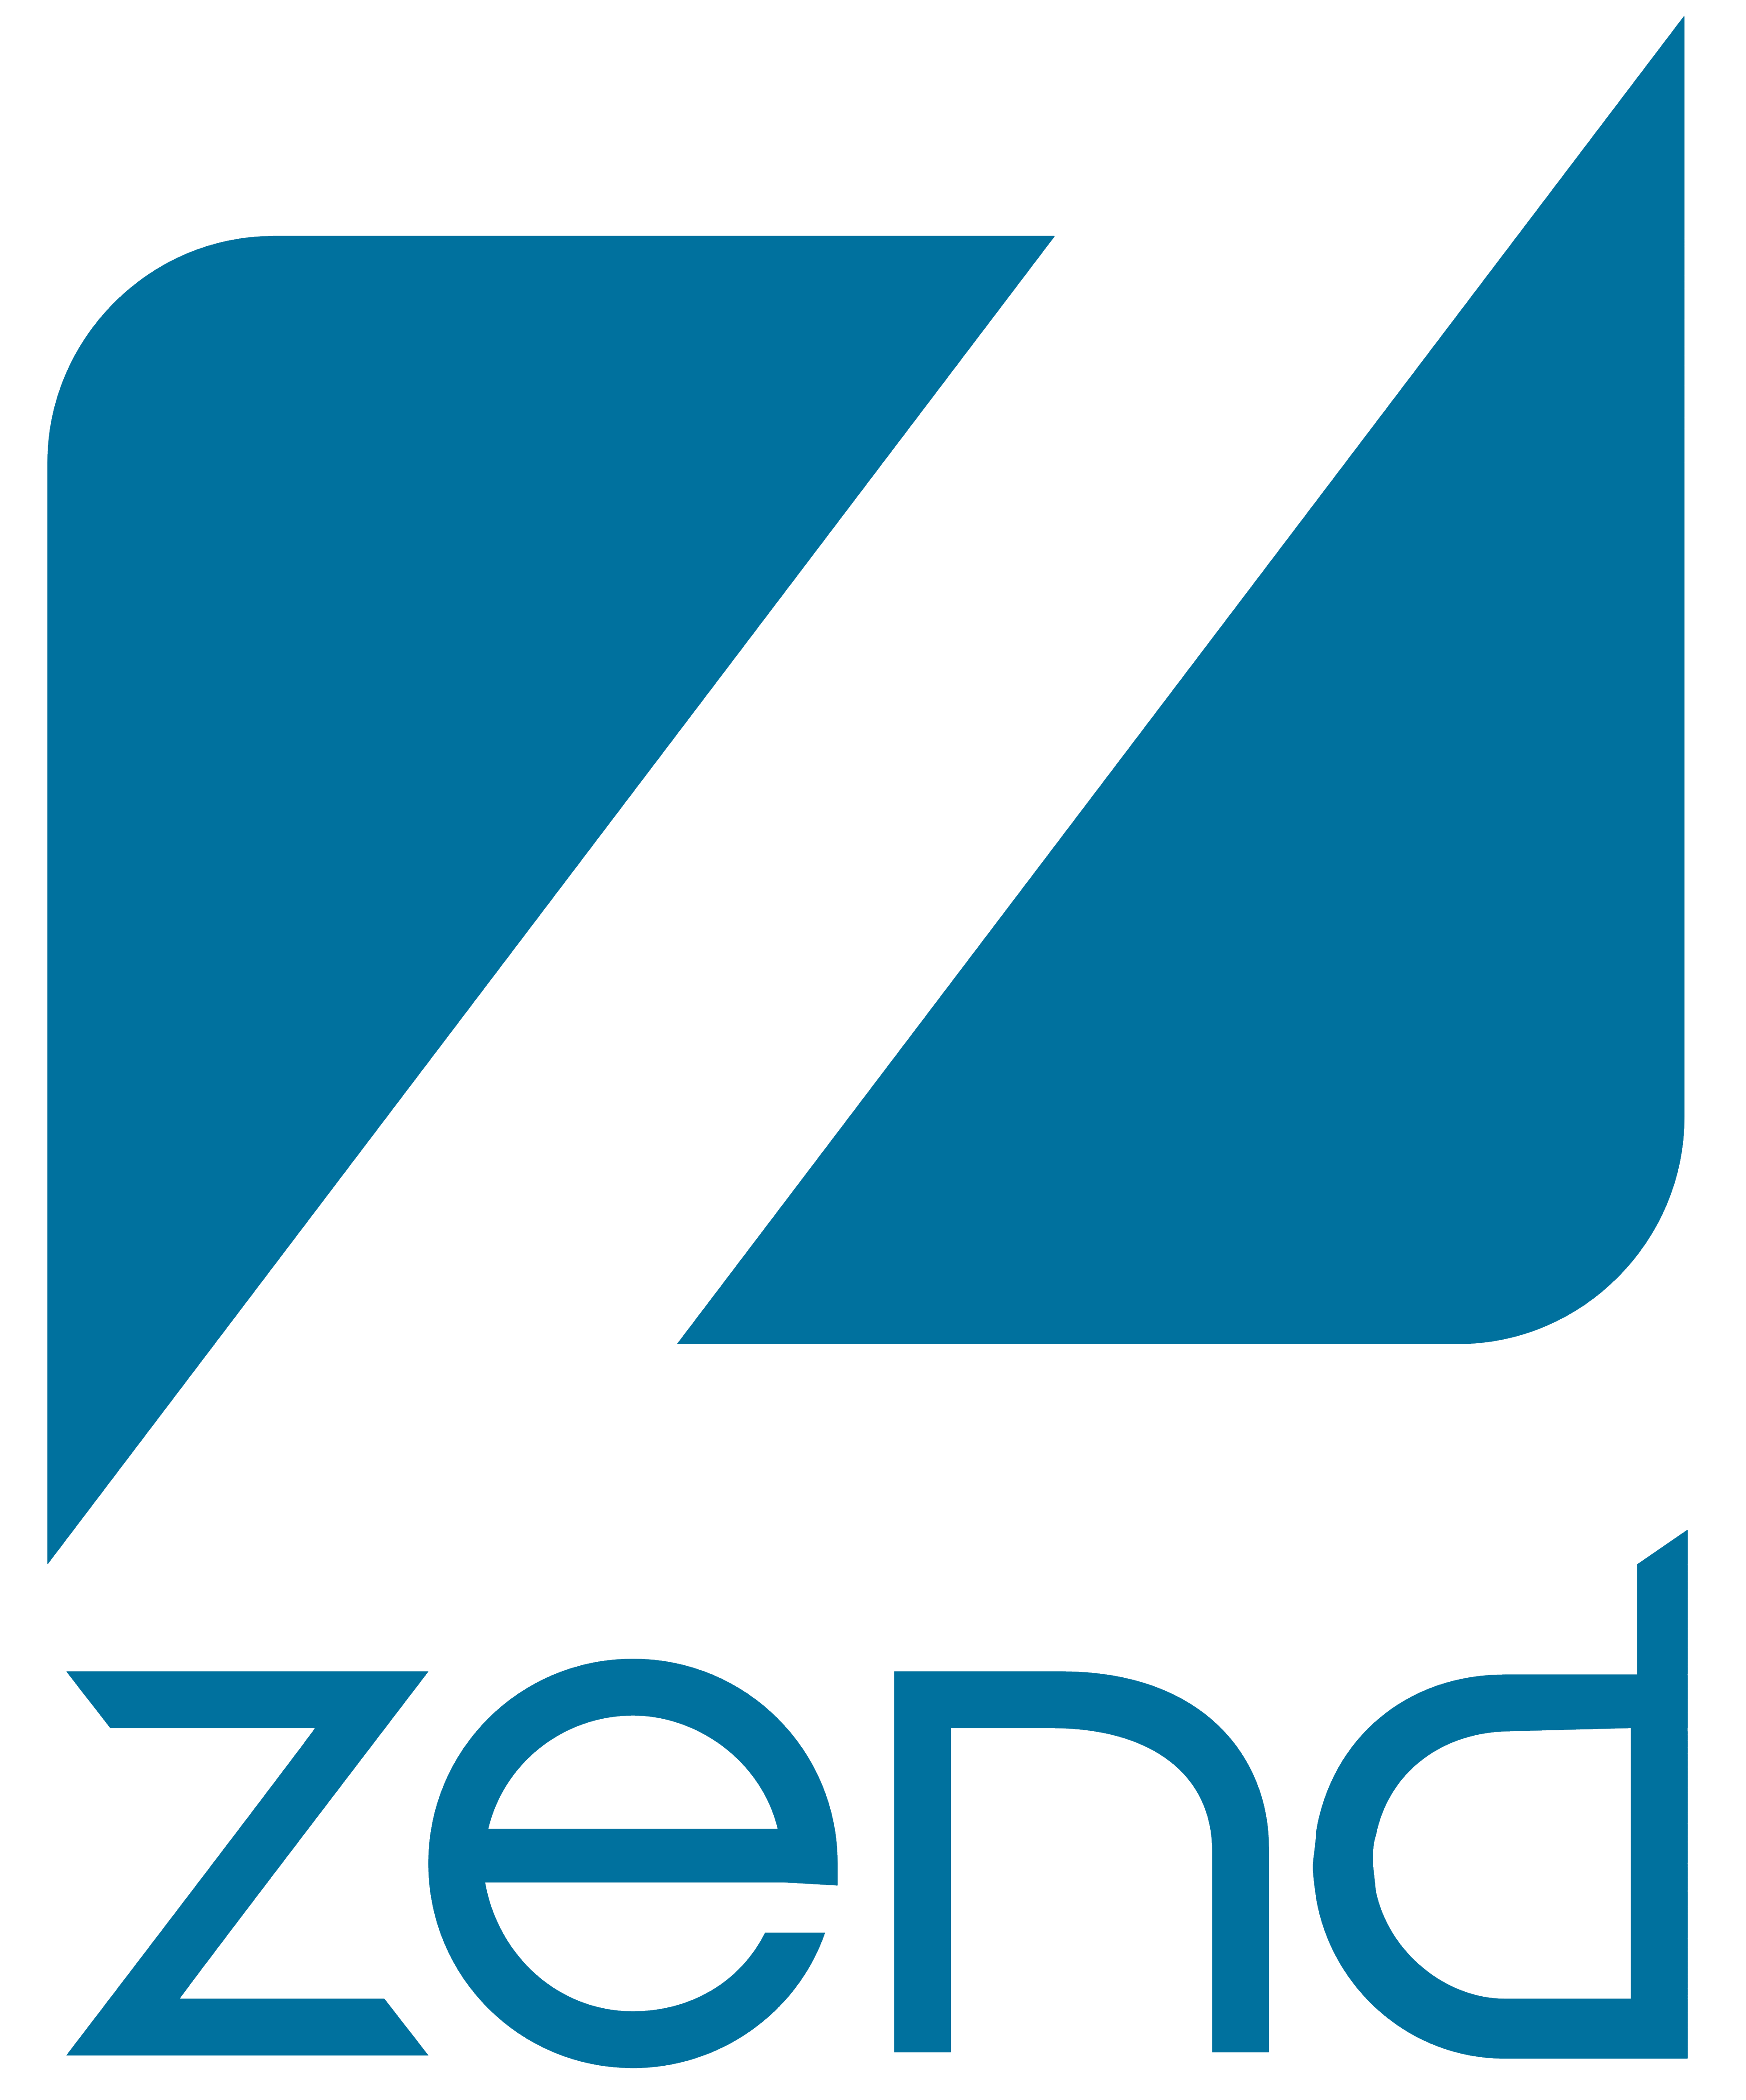 Zend logo, logotype